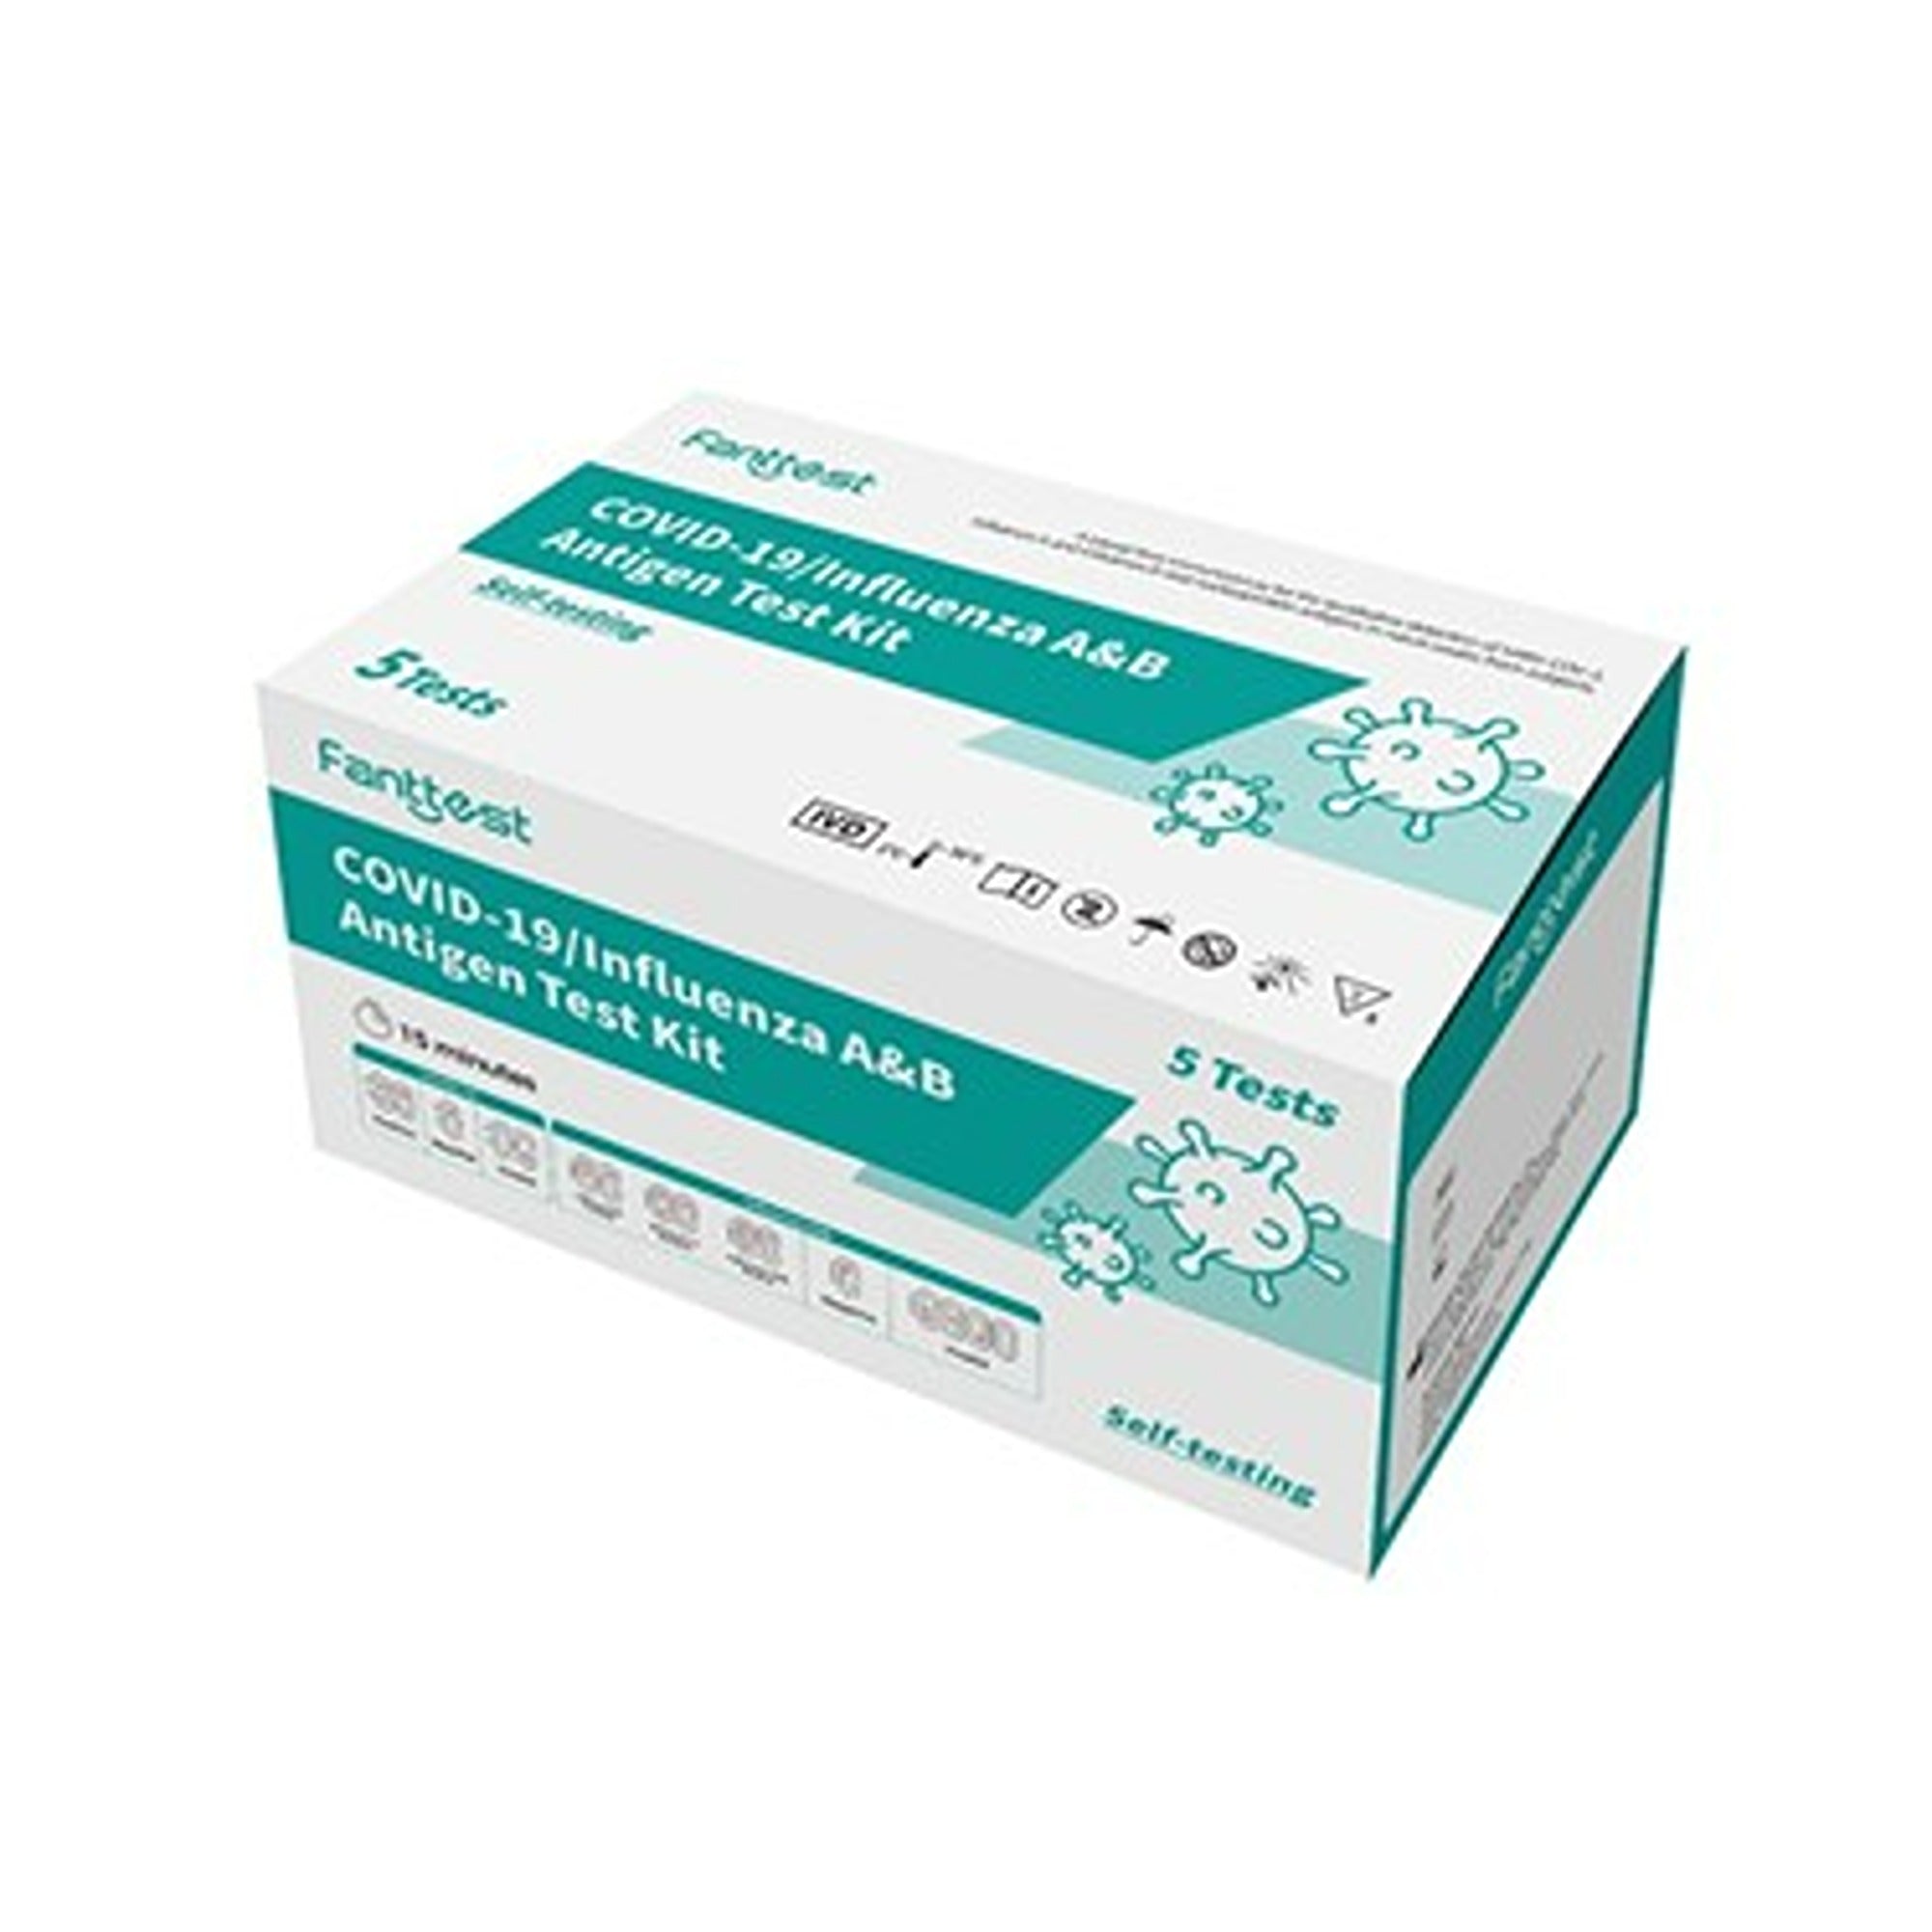 Fanttest COVID-19/Influenza A&B Antigen Test Kit - 5 test